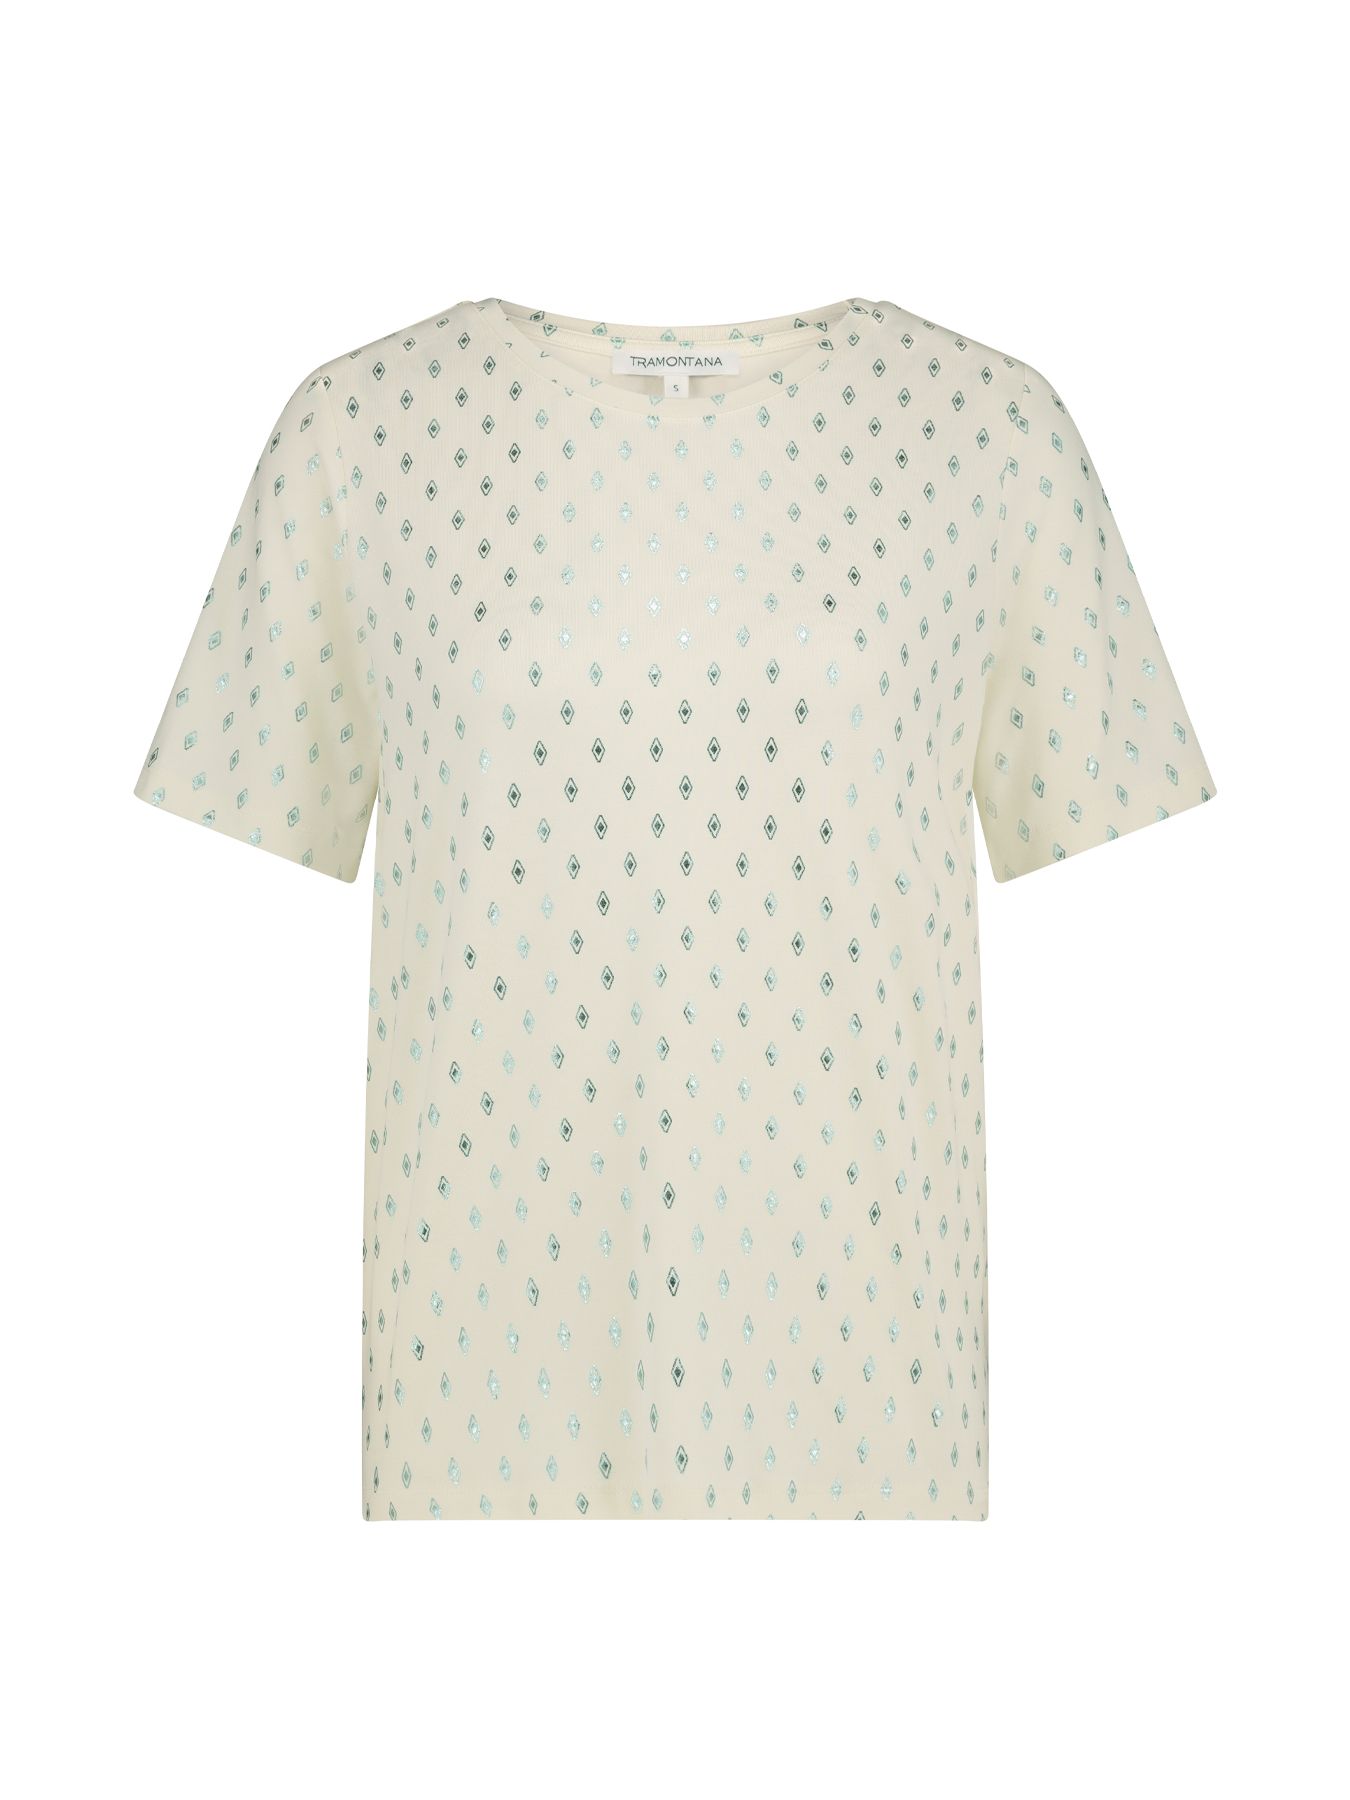 Tramontana T-Shirt Geometric Foil Light Green 006040 2900139868046